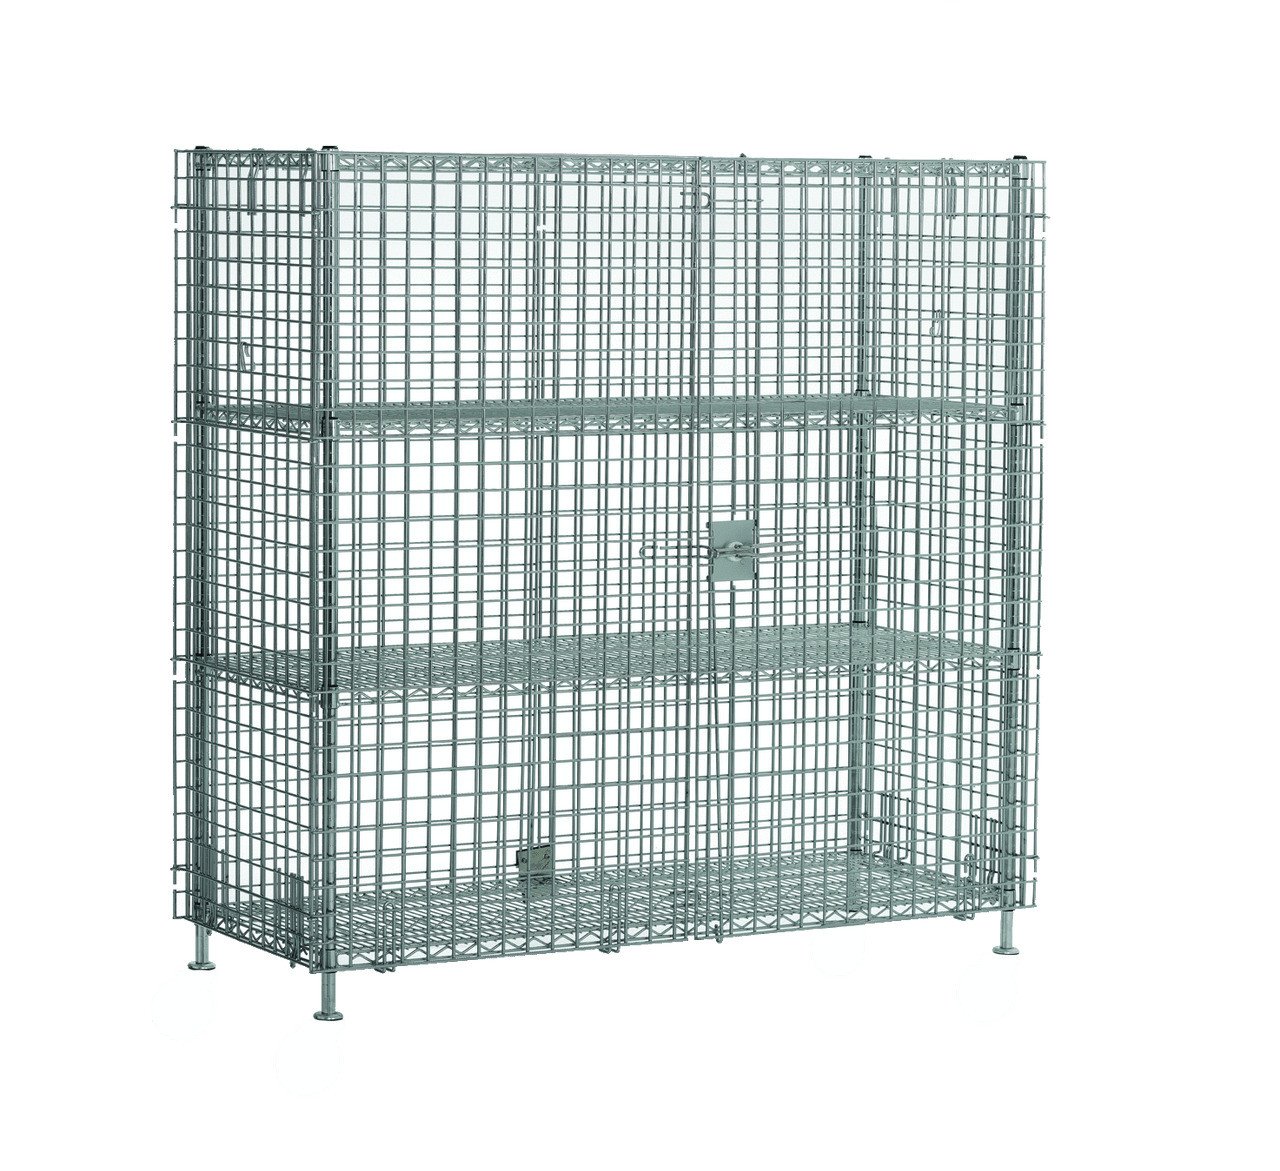 Williams Stationary Bulk Storage Cage - 1800 Pounds - JHWWBSC2460S